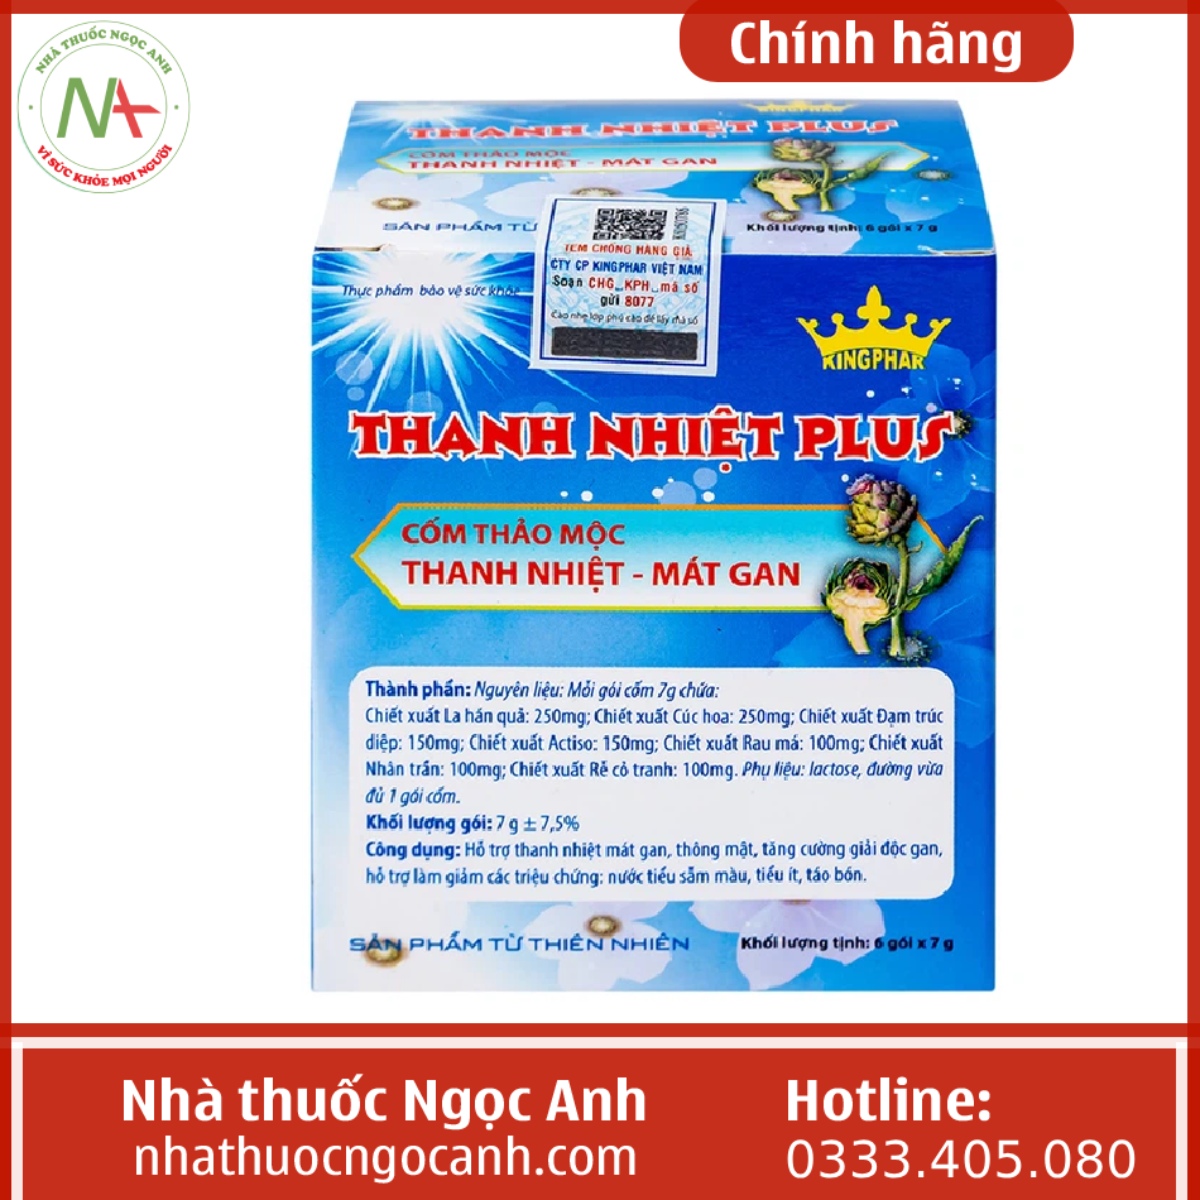 Thanh Nhiệt Plus